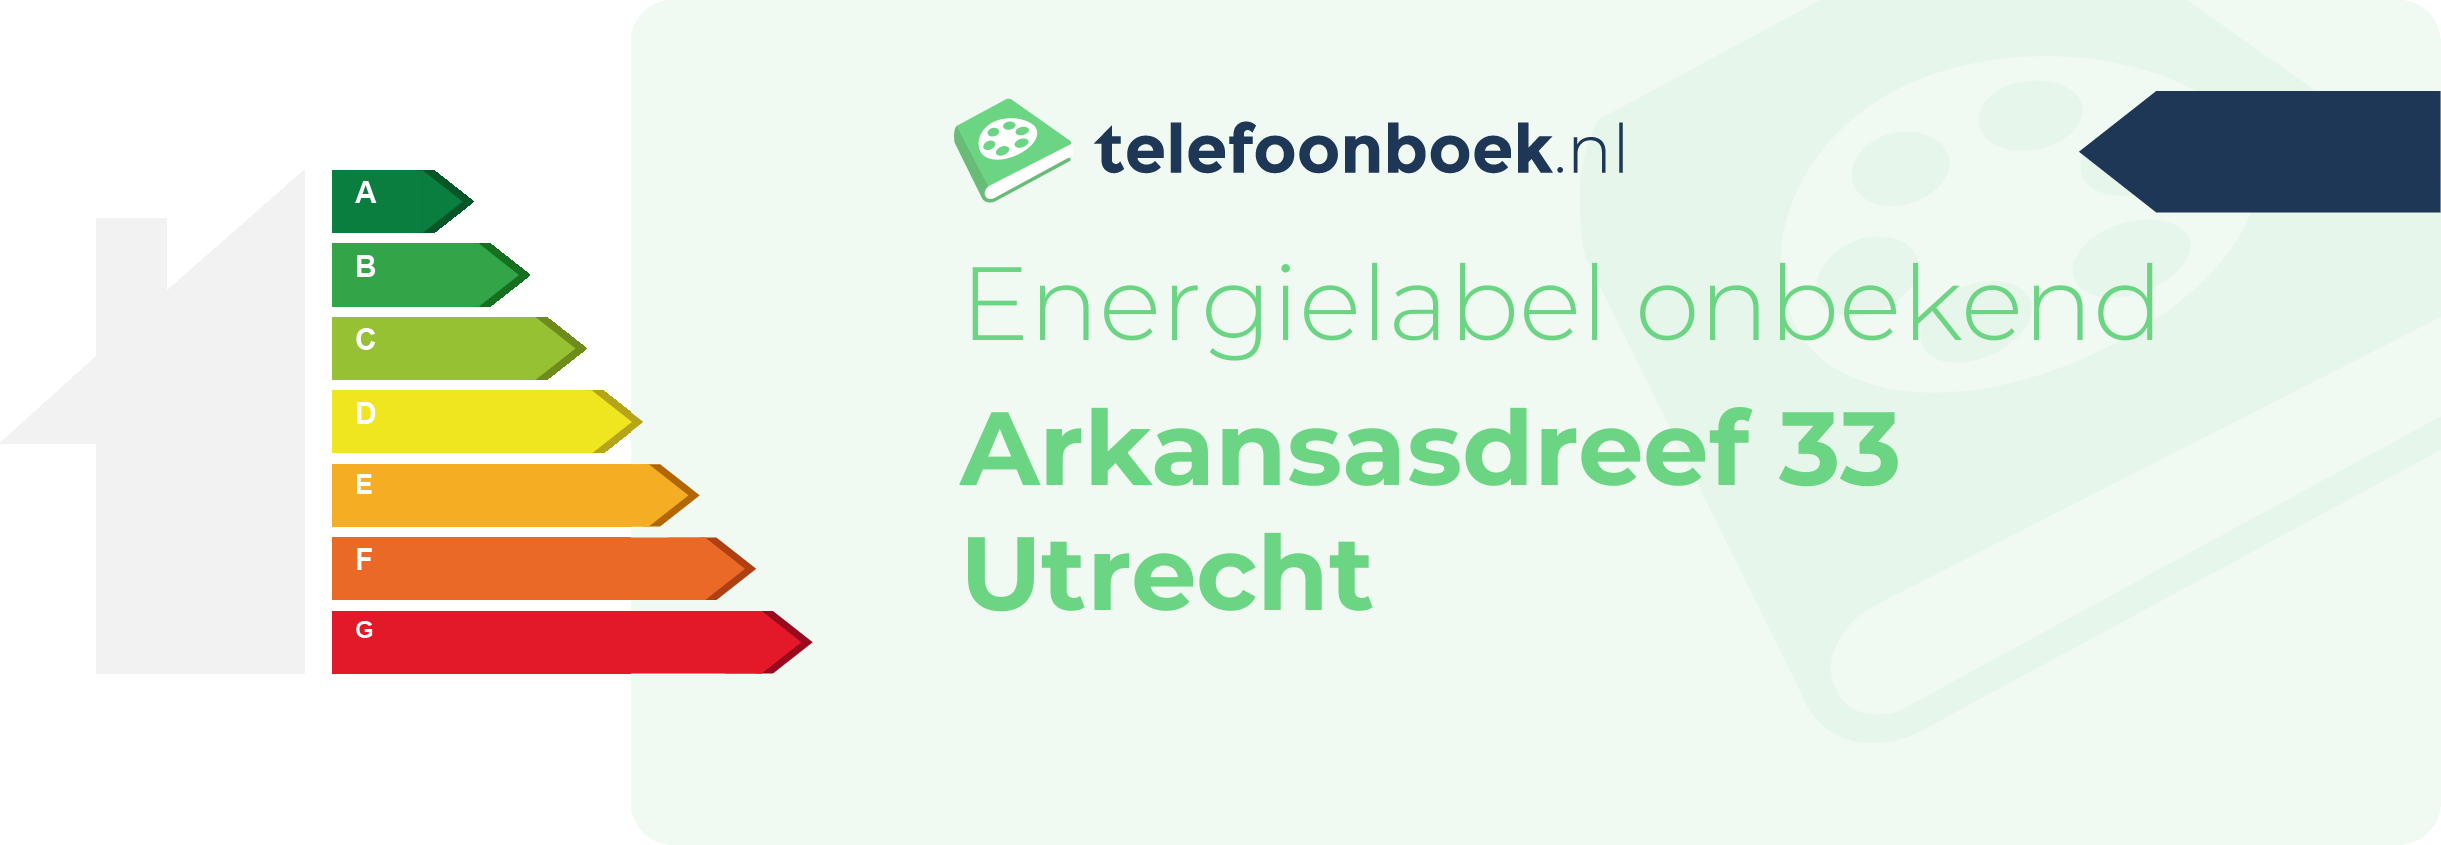 Energielabel Arkansasdreef 33 Utrecht